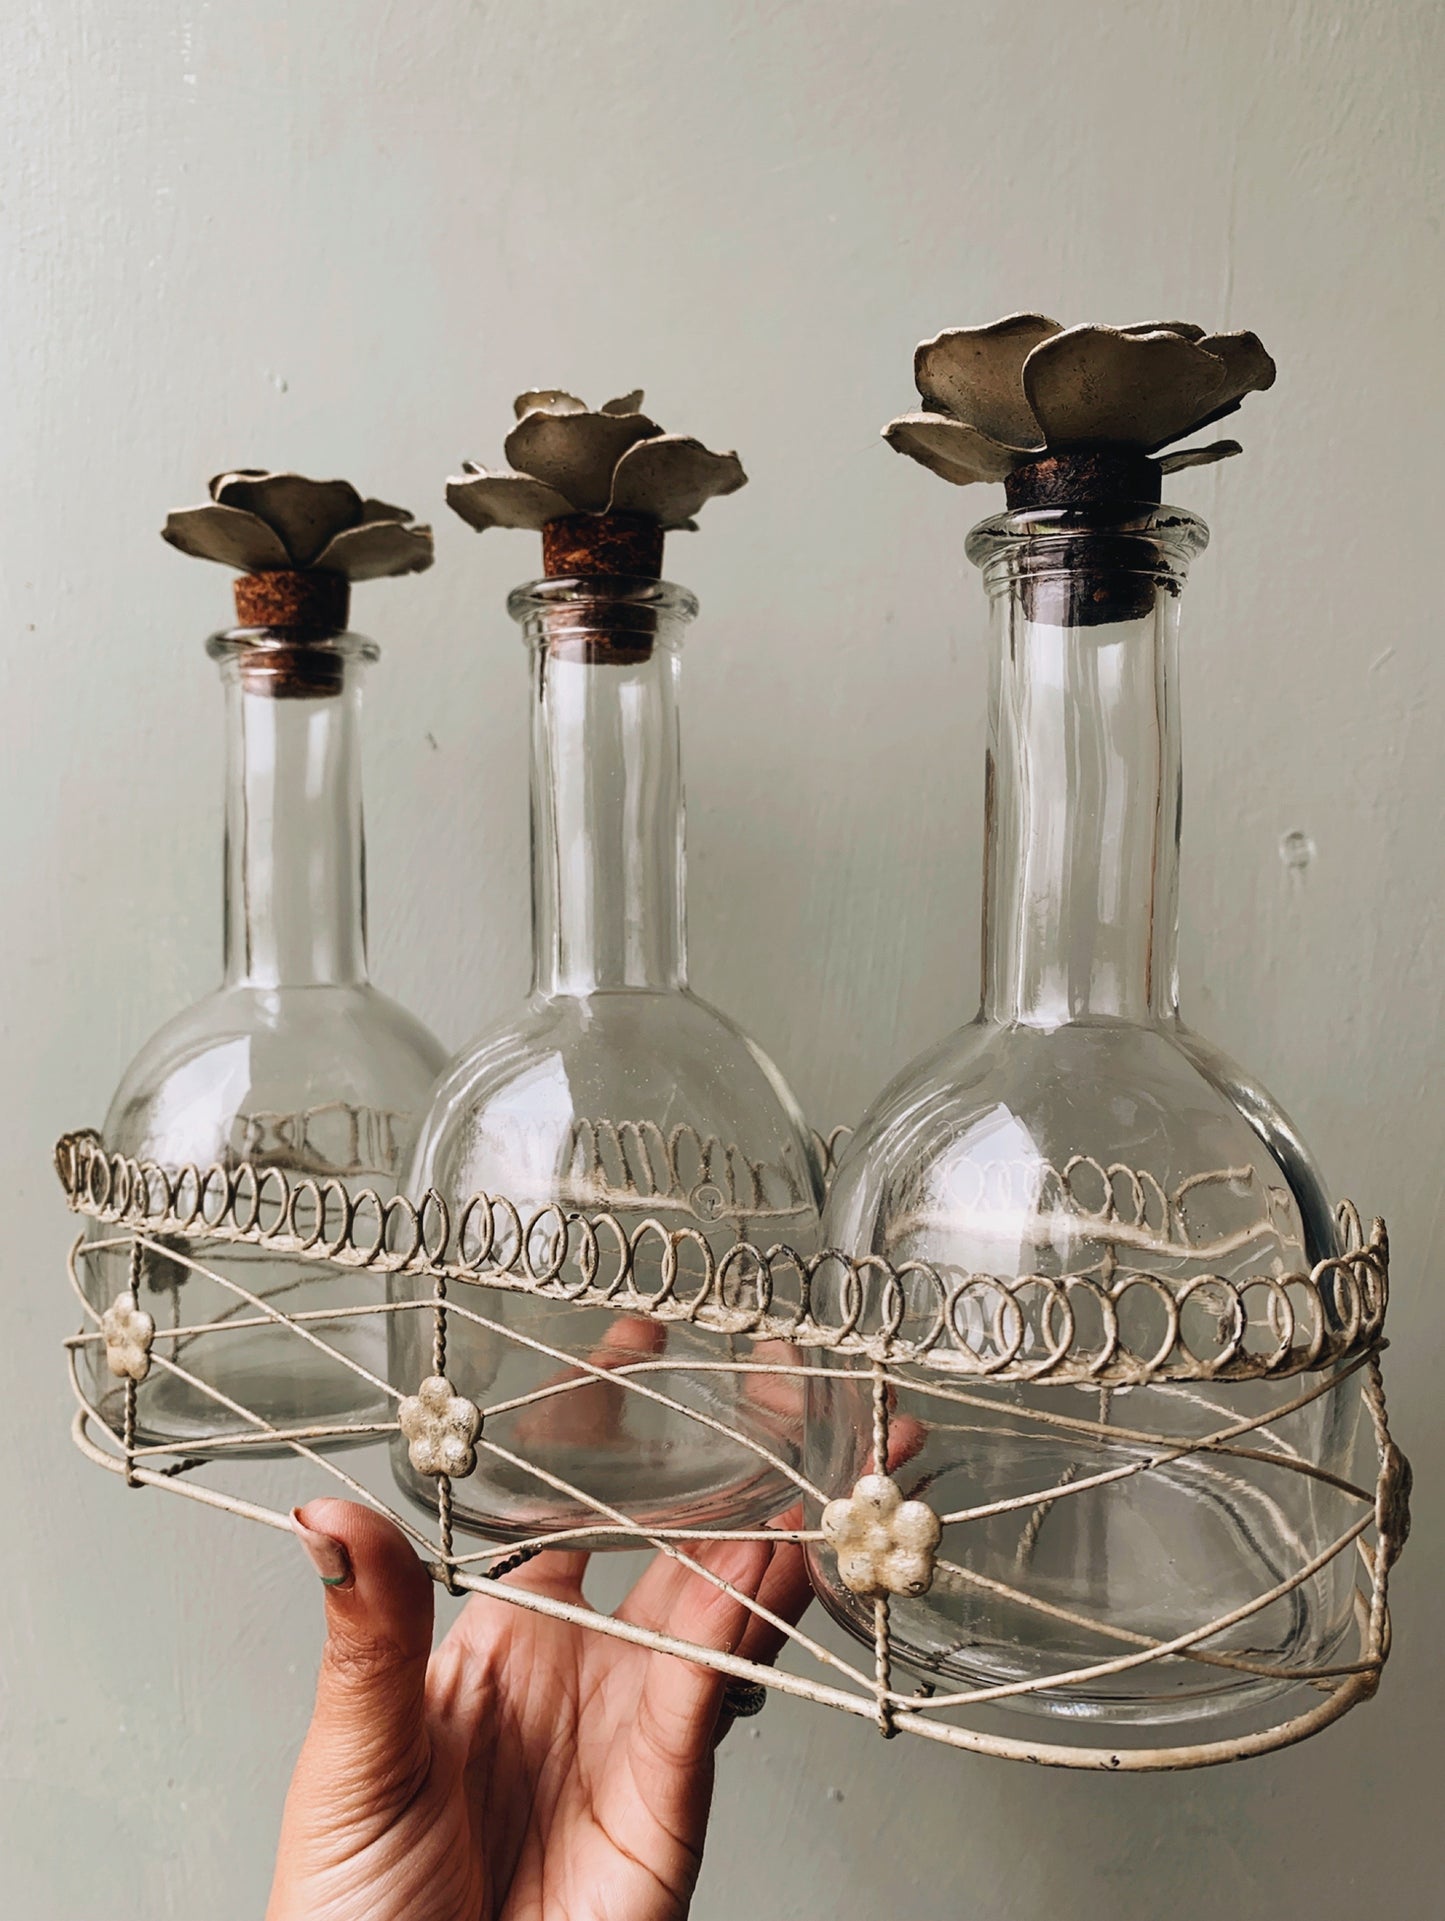 Vintage Set of French Bottles with Floral Ceramic Cork Stoppers in Basket